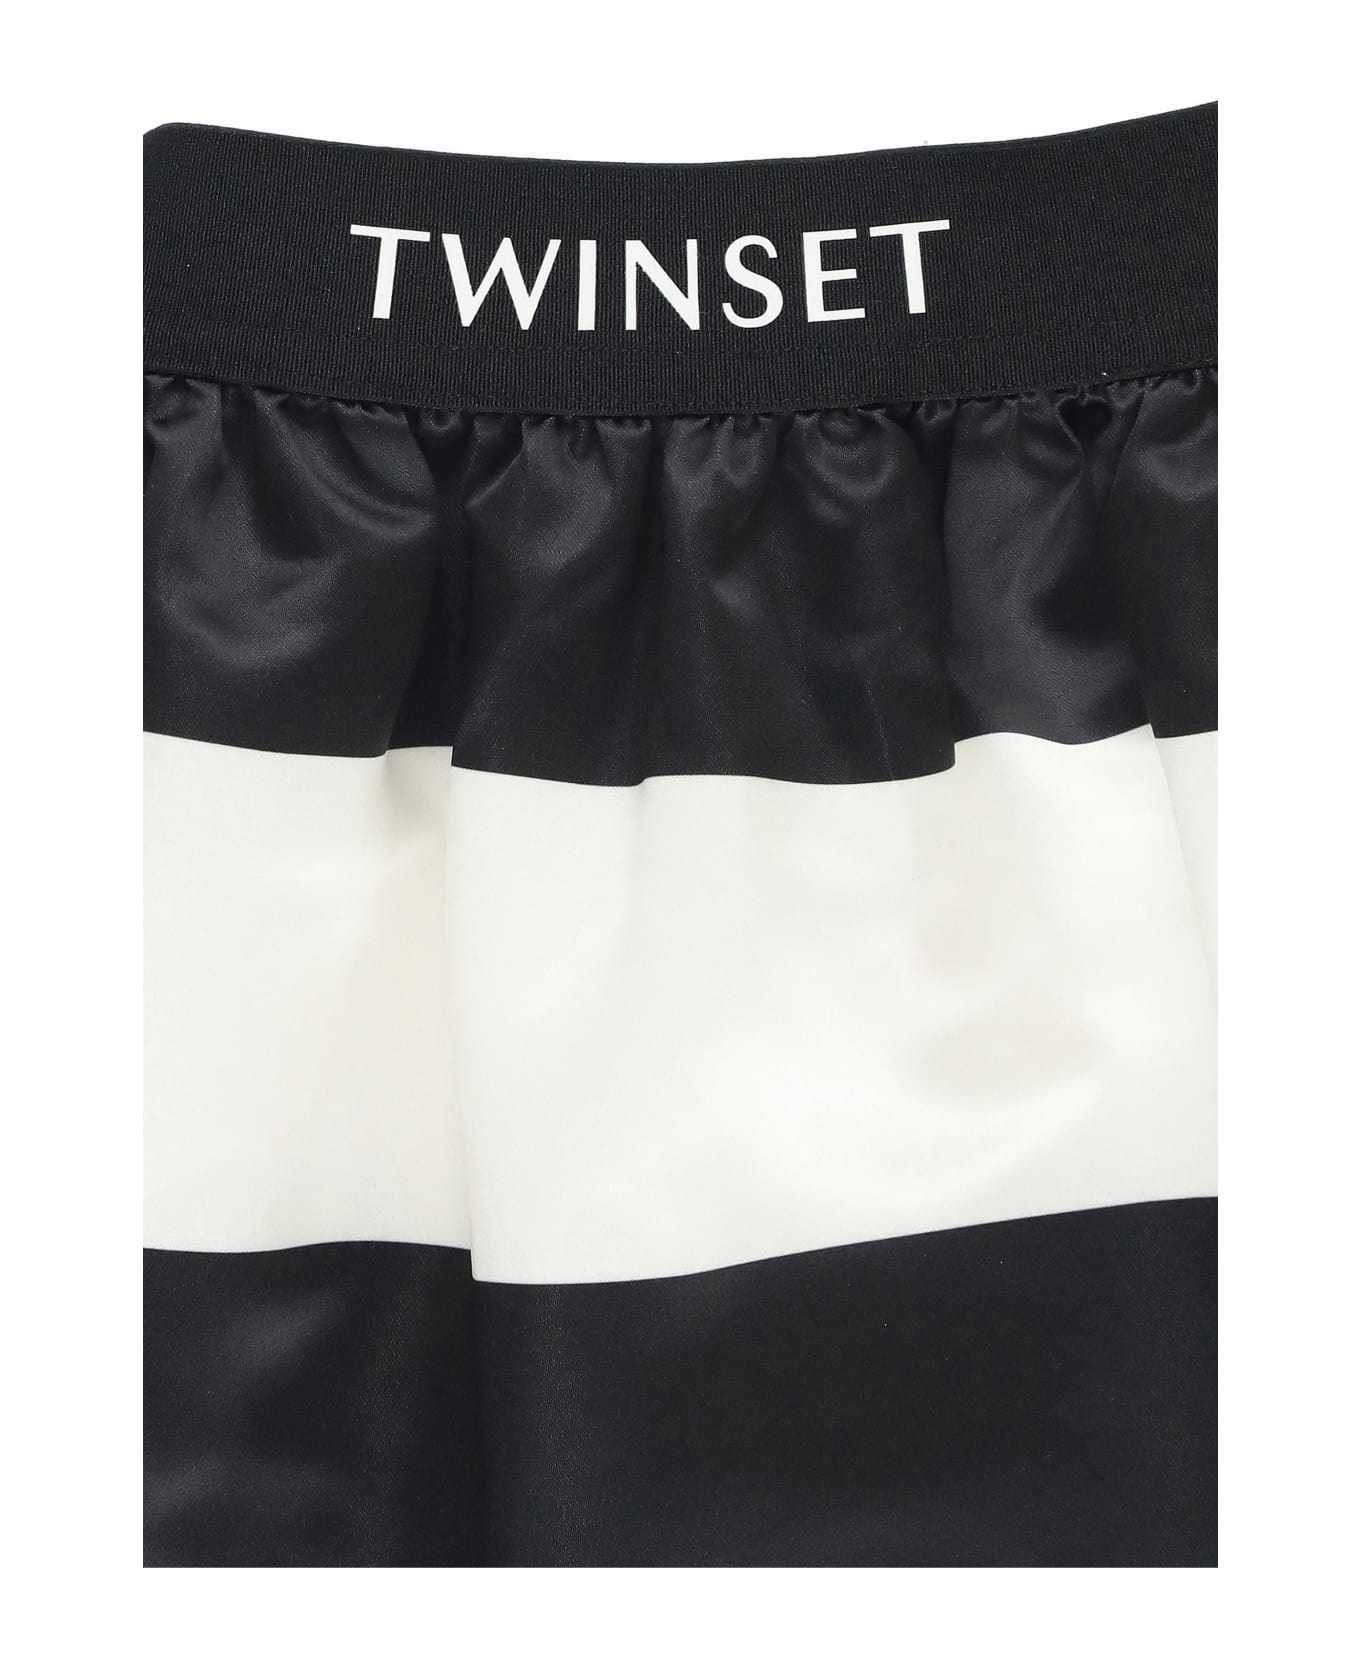 TwinSet Satin Striped Skirt - Black